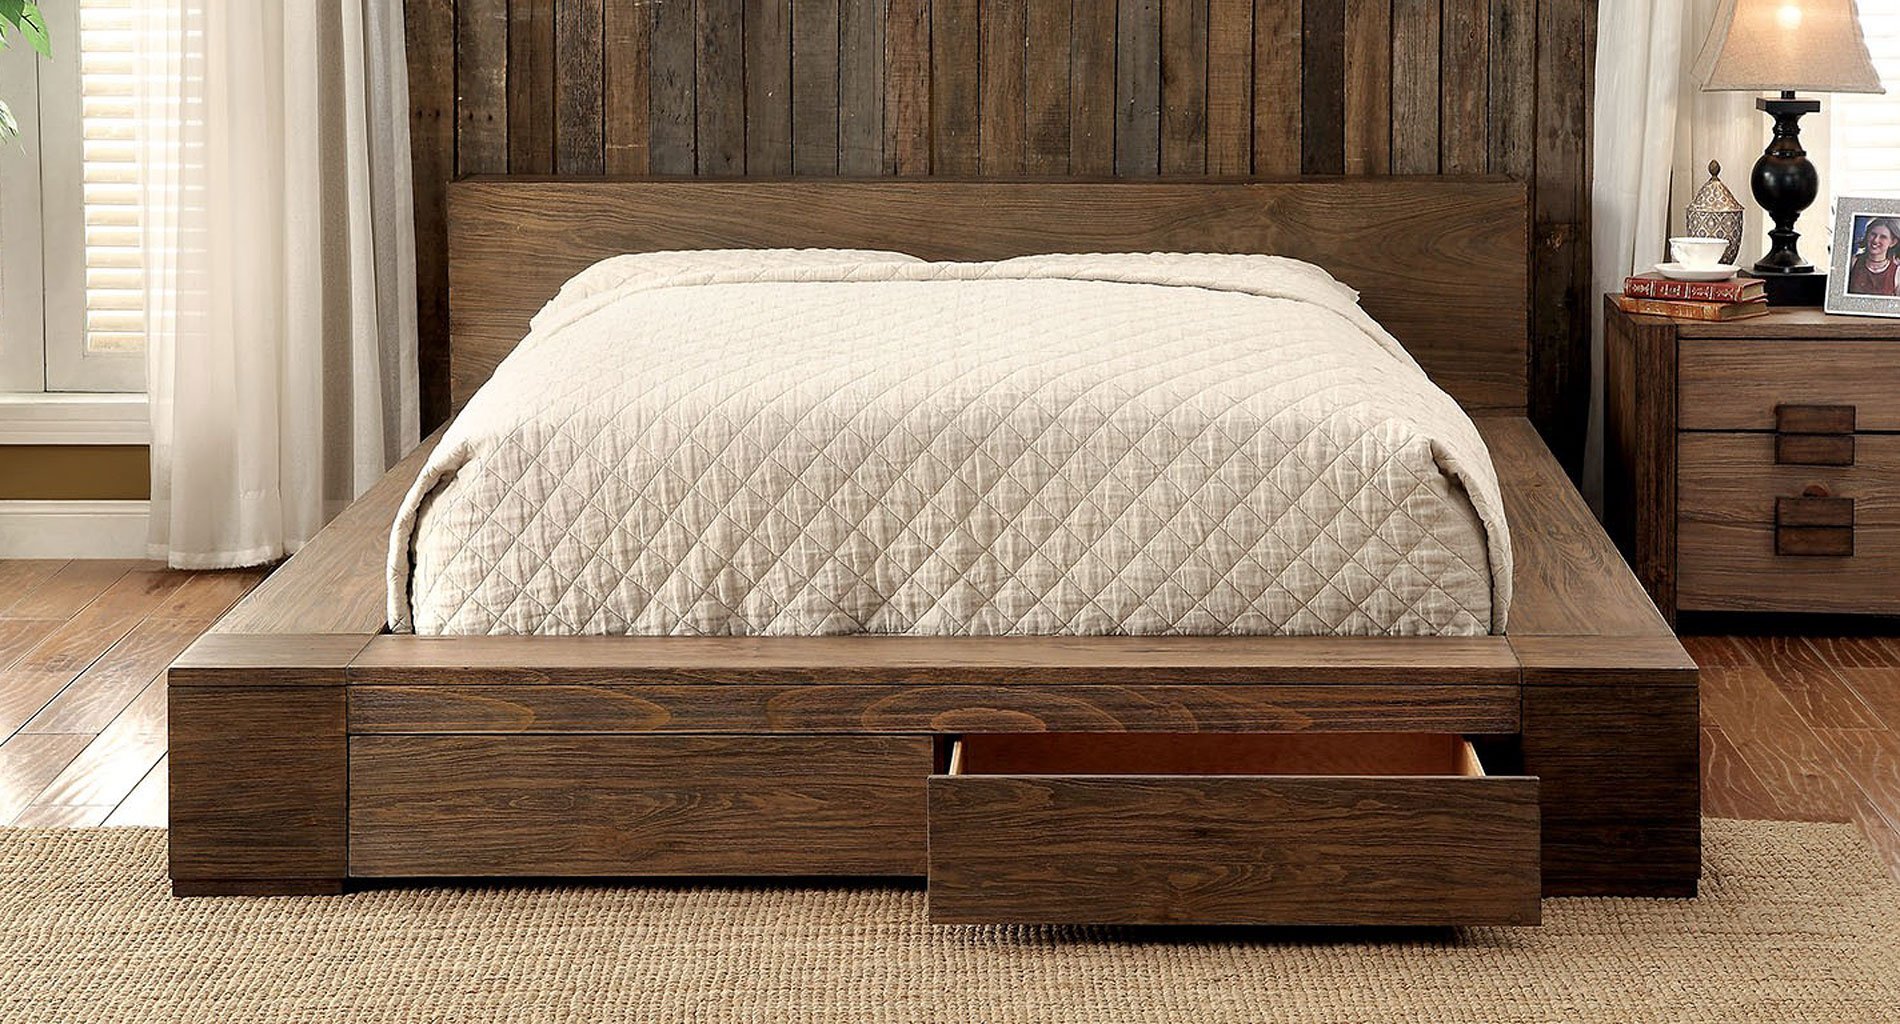 Esofa California King Bed Storage, Rustic California King Bed Frame